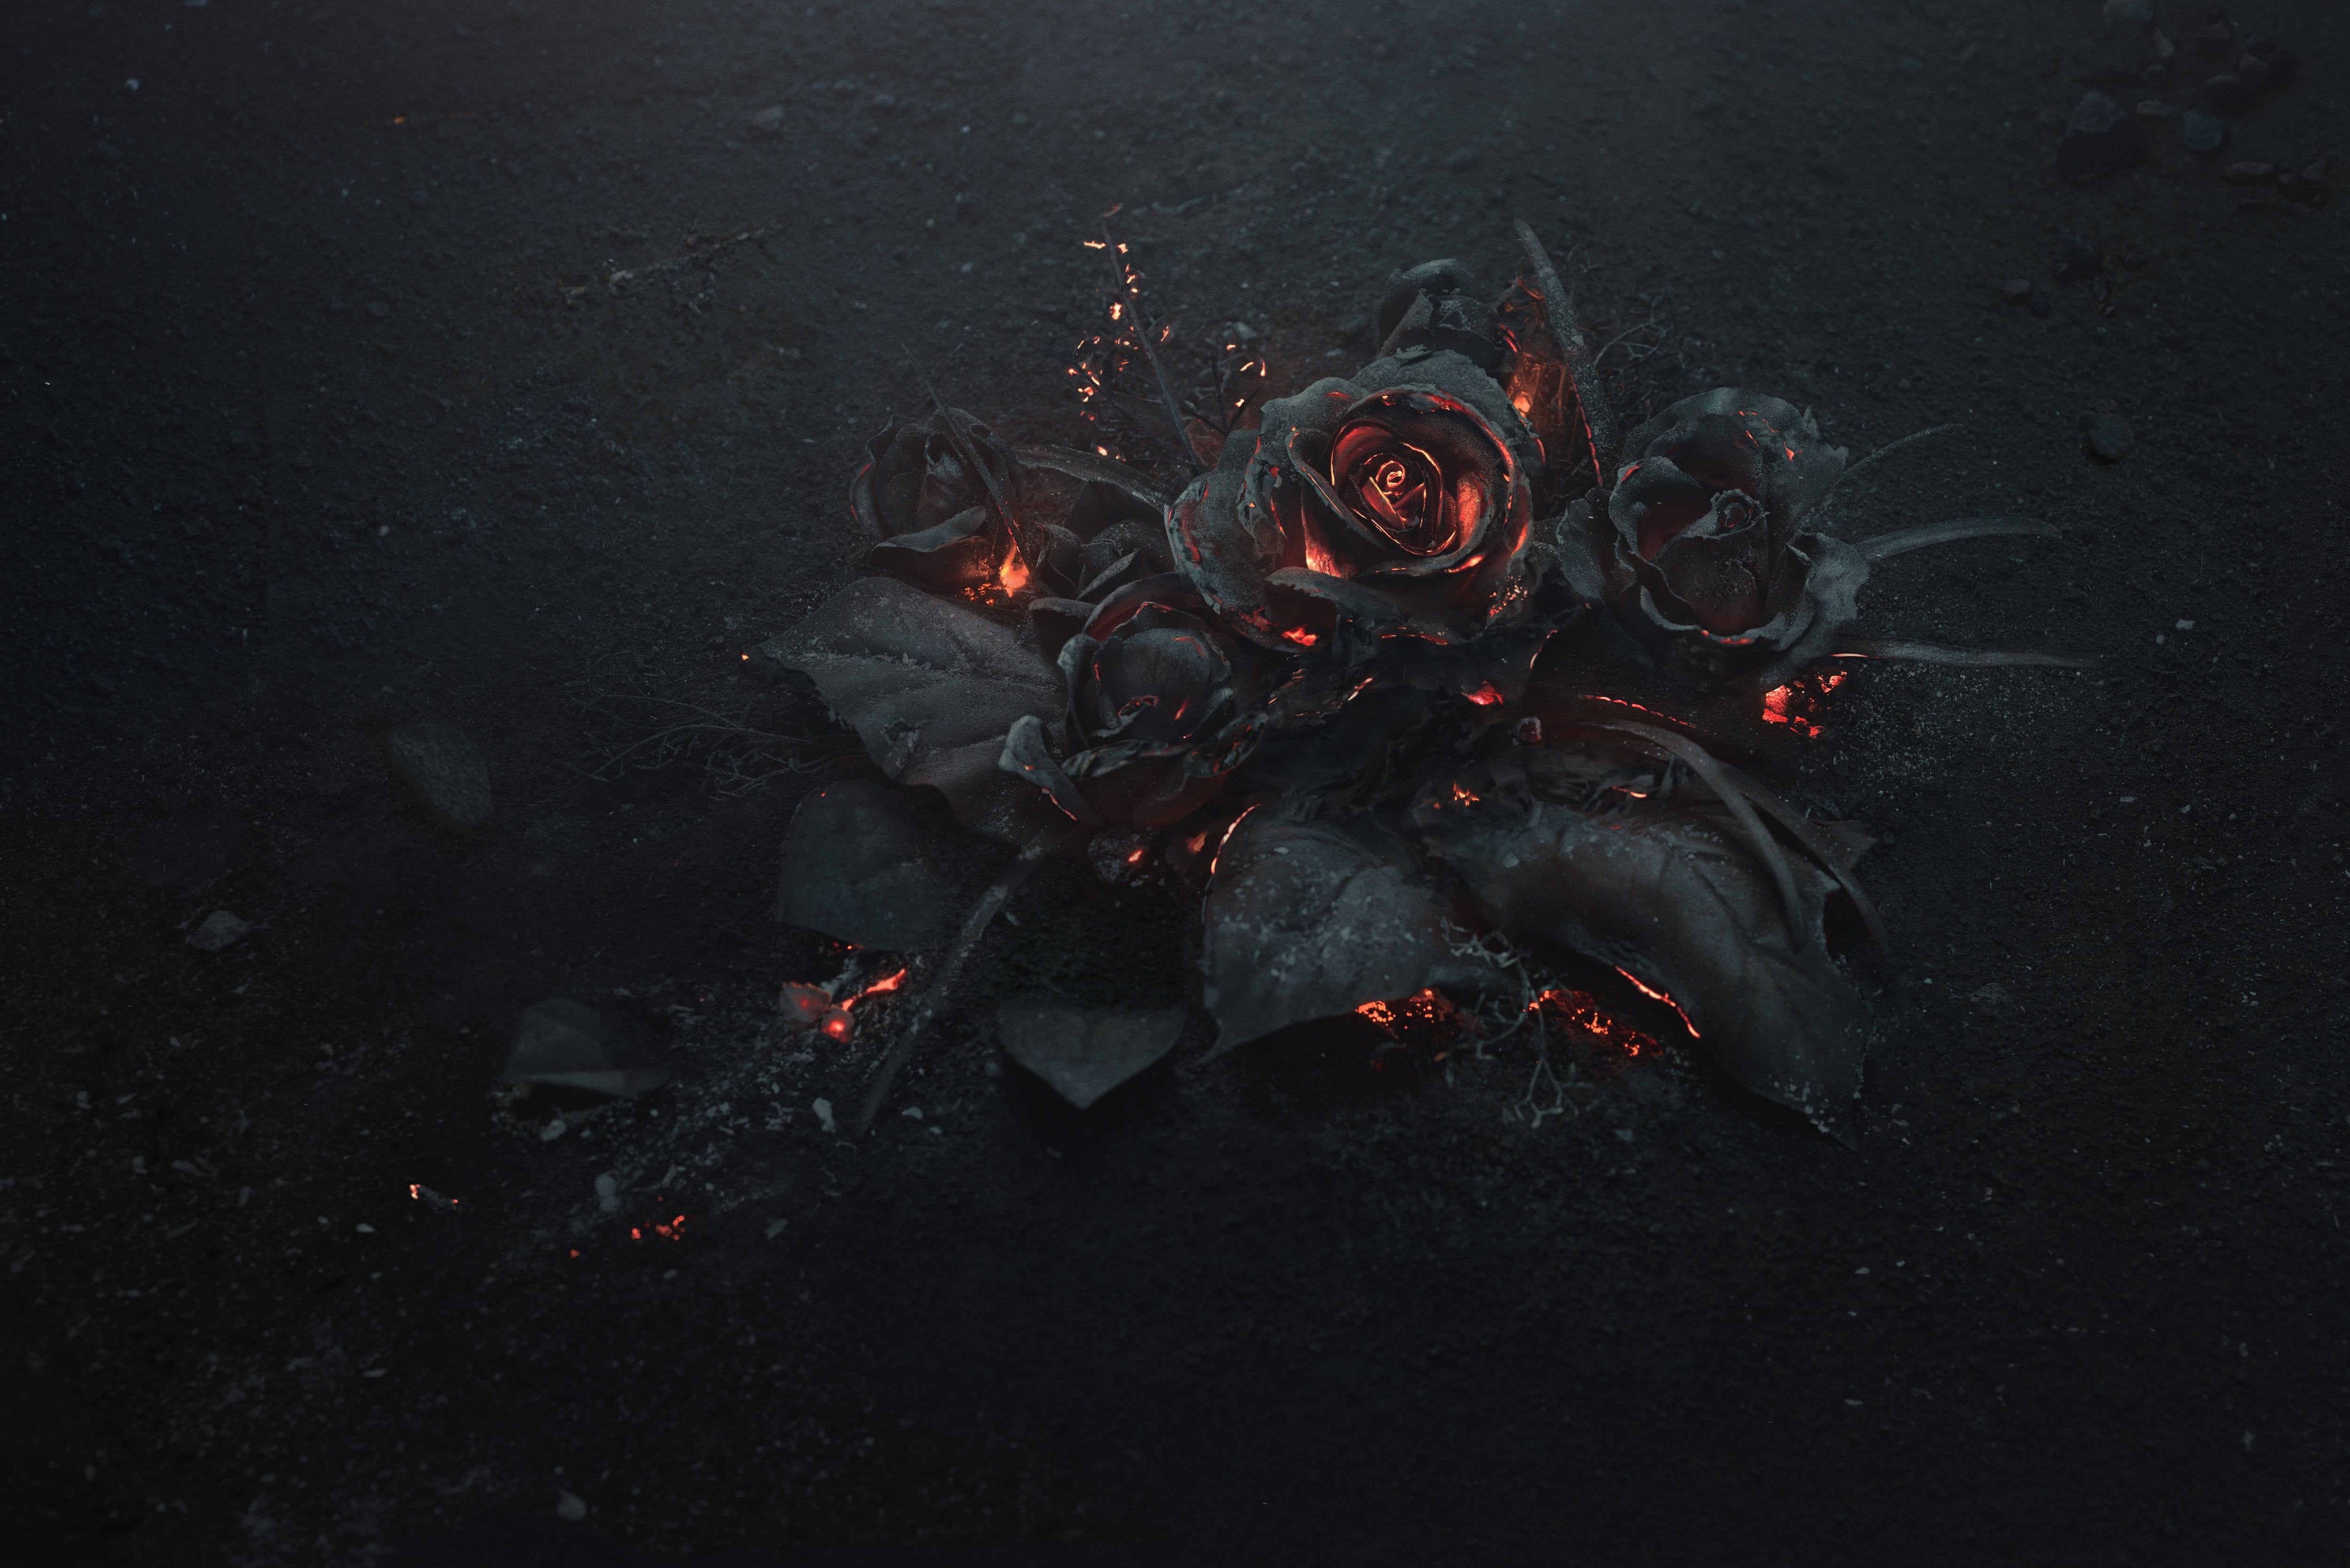 black rose illustration #rose #ash #burning #black #abstract #dark #flowers #fire K #wallpaper #hdwallpaper #de. Rose illustration, Burning rose, Rose wallpaper